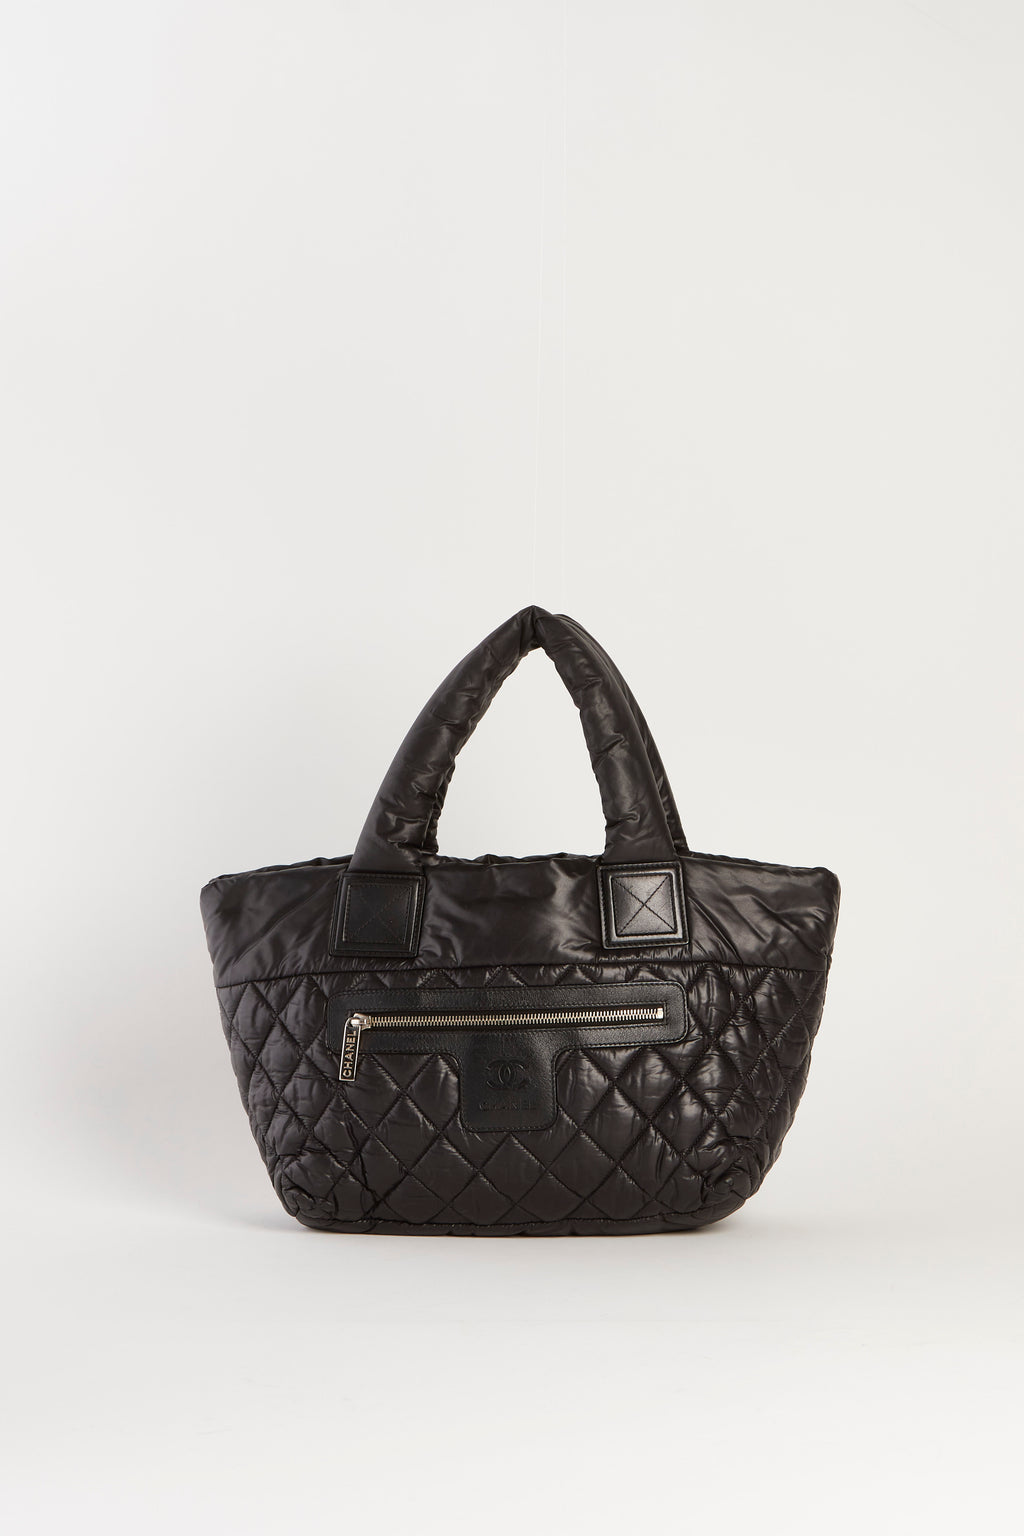 2010s Chanel Nylon Puffer Black Tote Bag